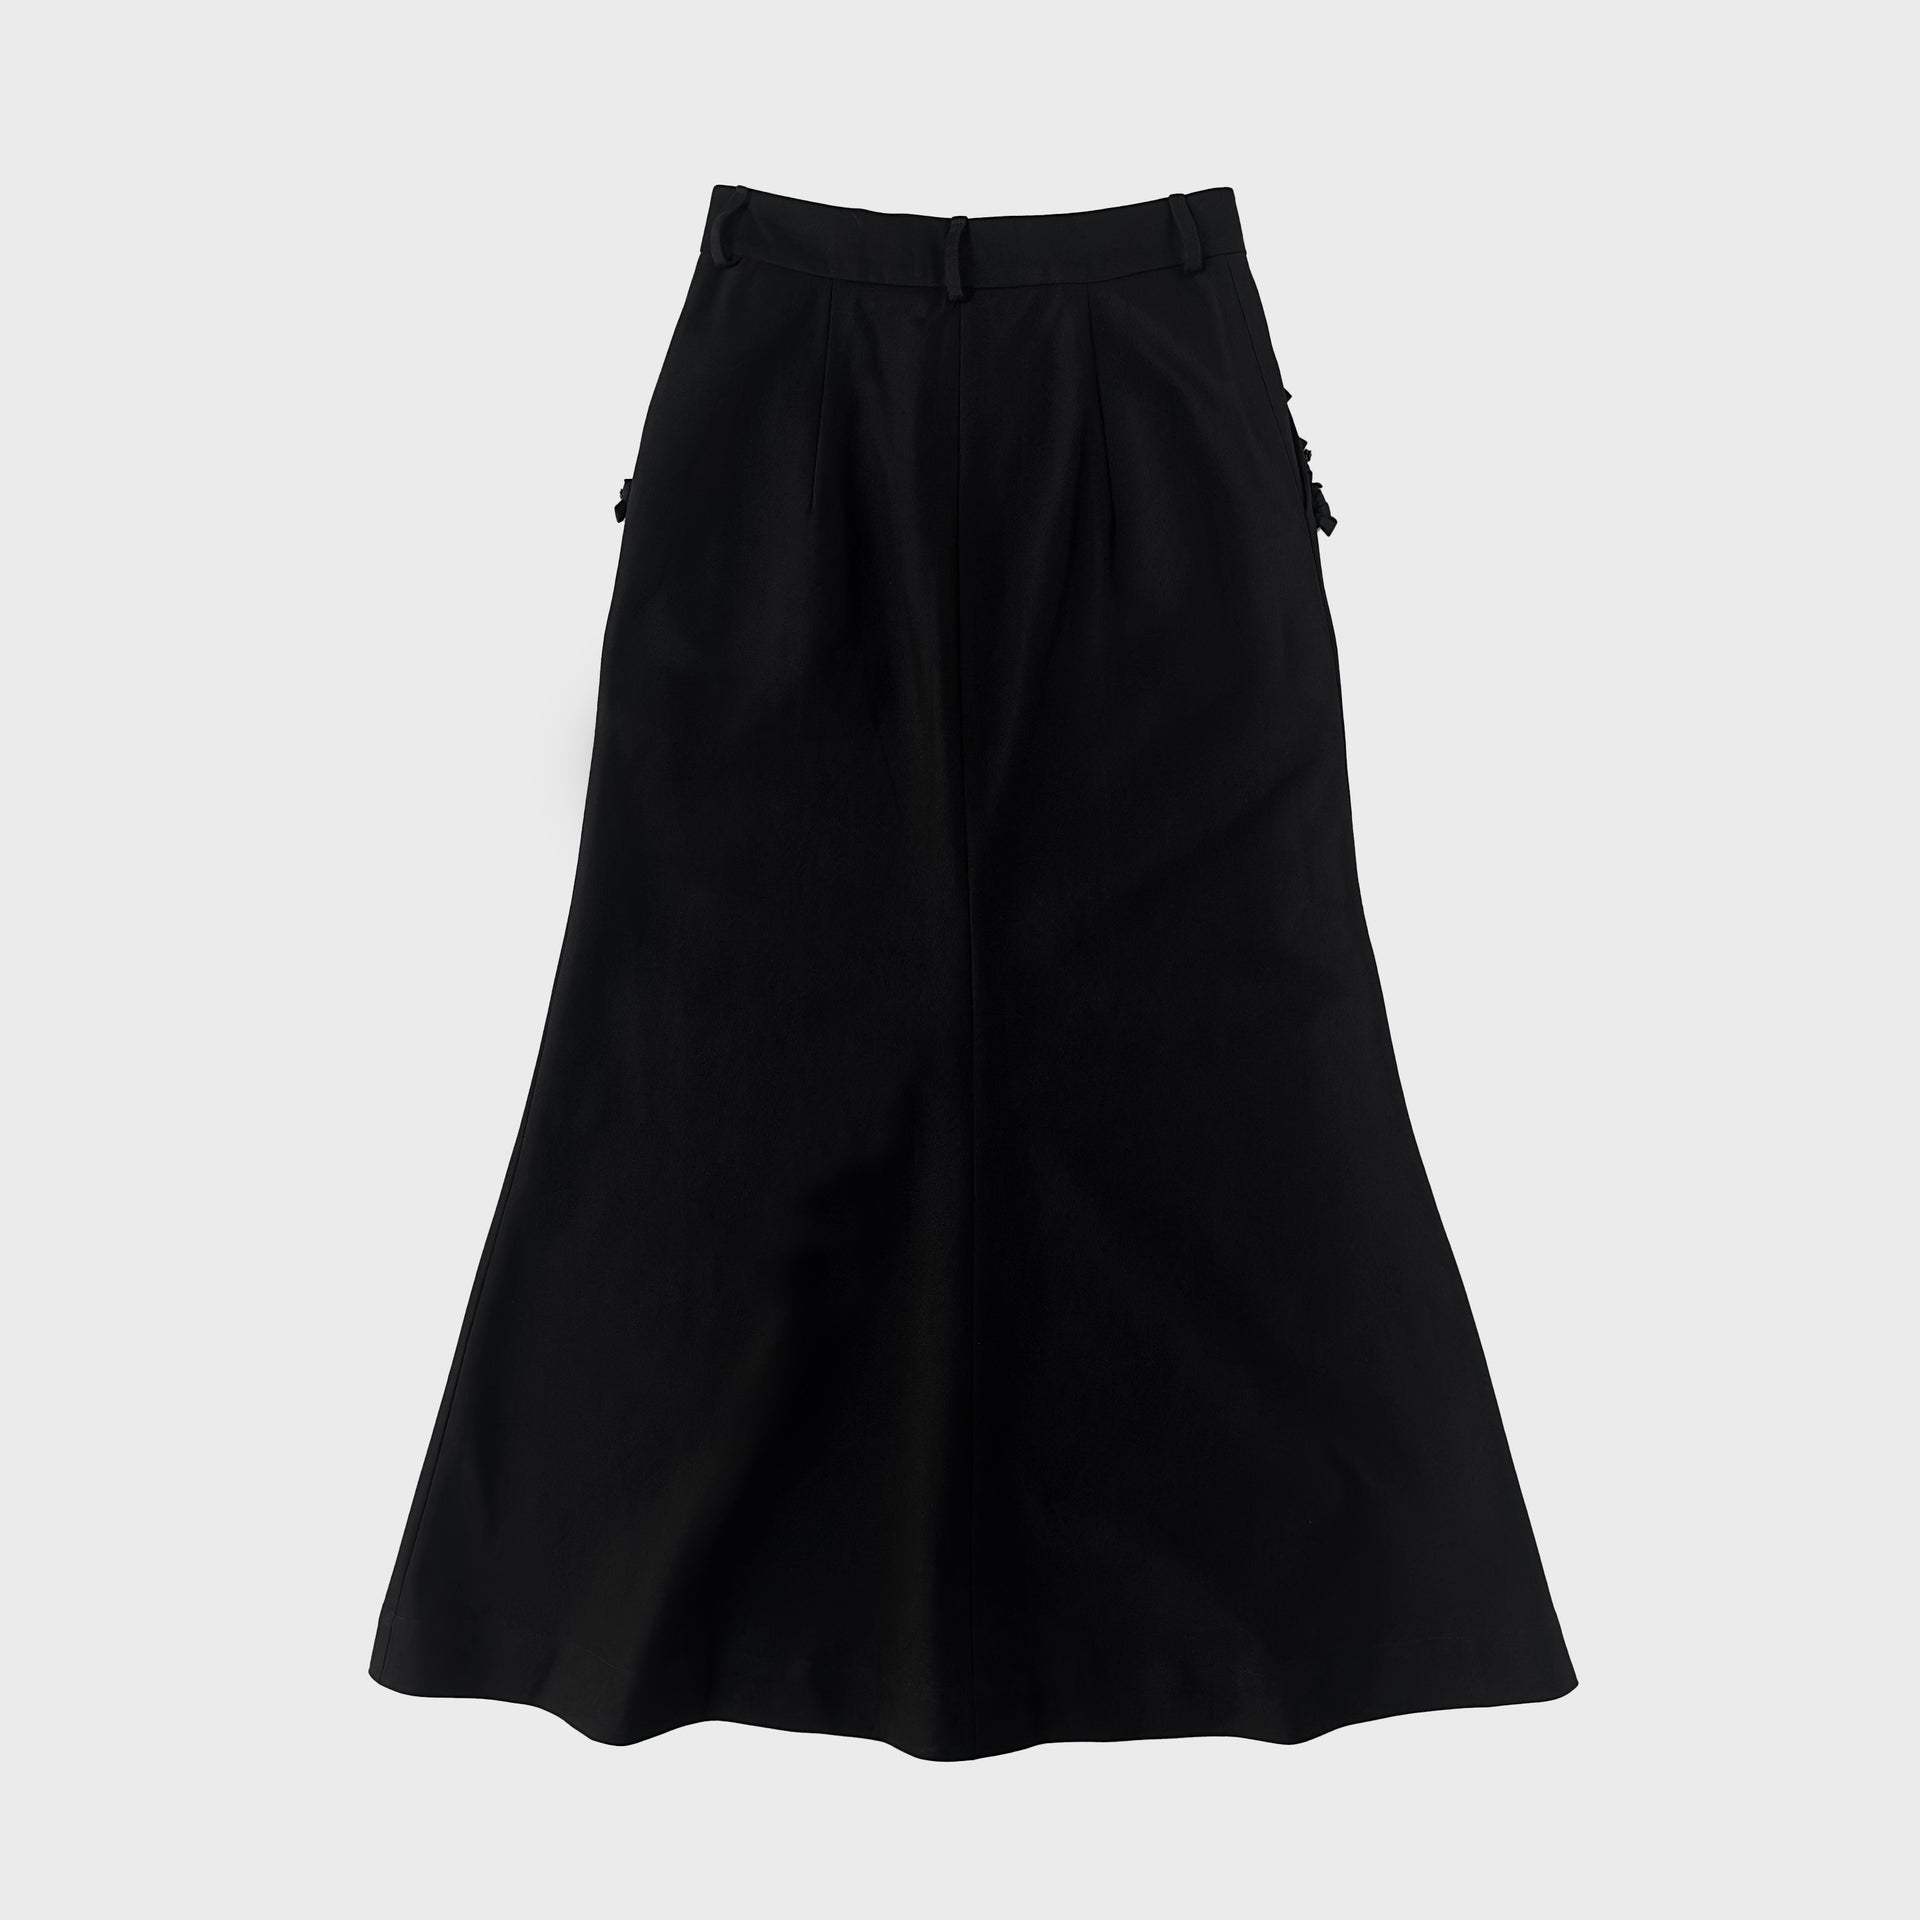 Decorative Flared Maxi Skirt [Black]